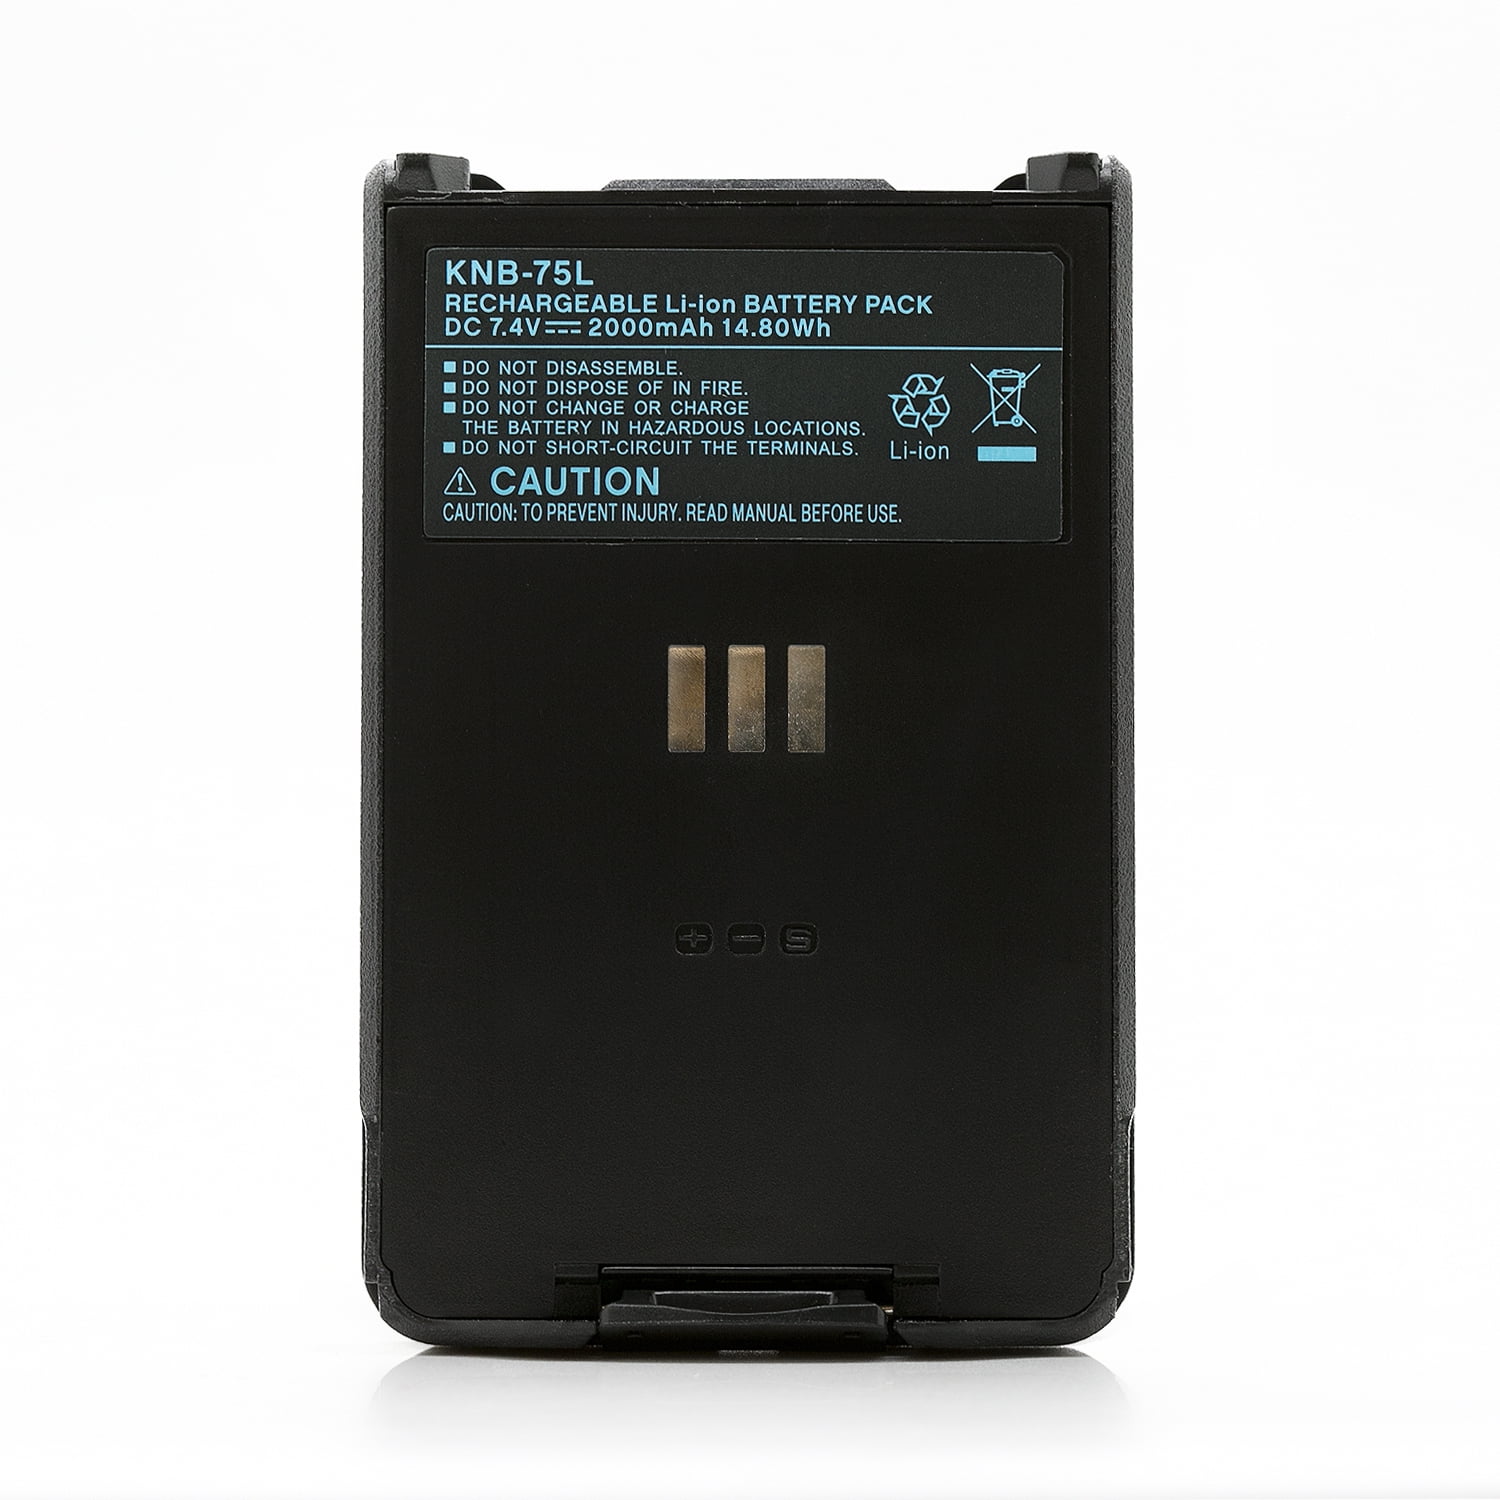 New Kenwood KNB-L1M 2000mAh Compact Slim Battery Pack